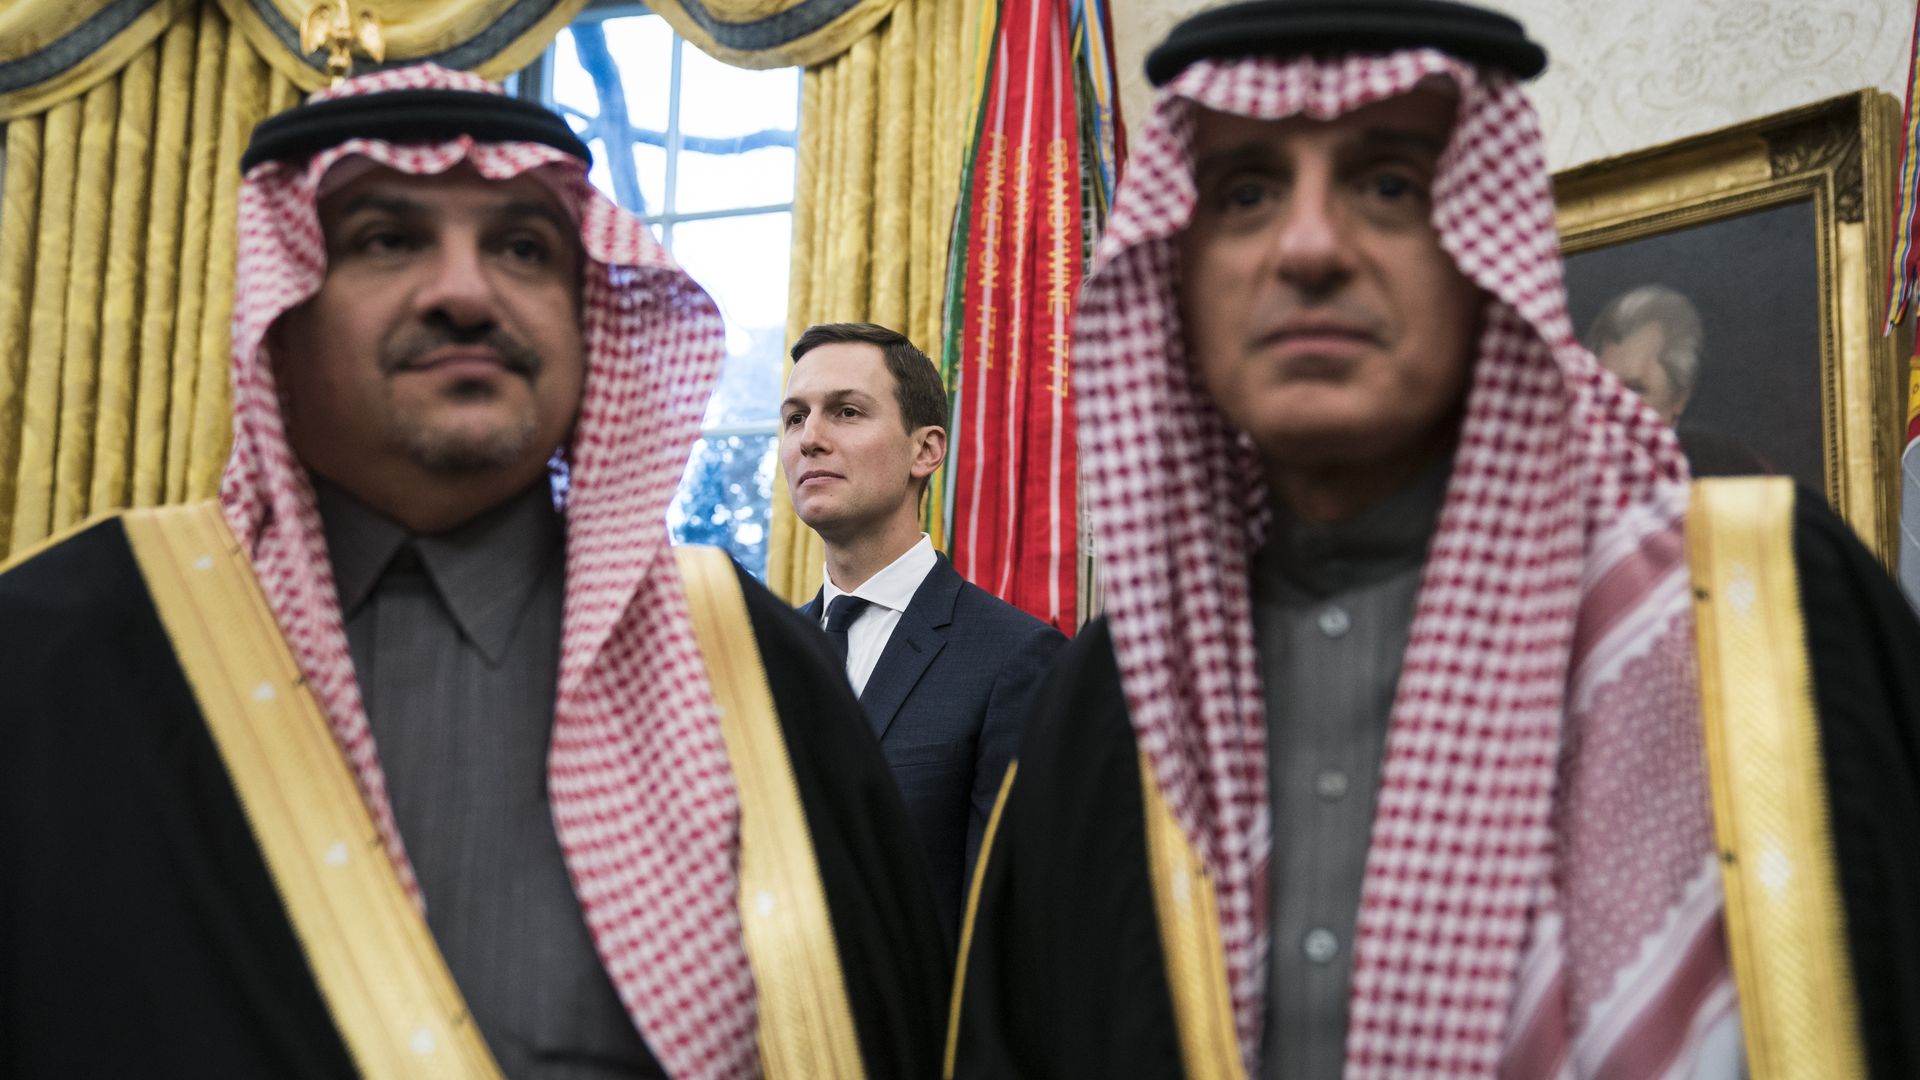 Jared Kushner stands behind two Saudi men.